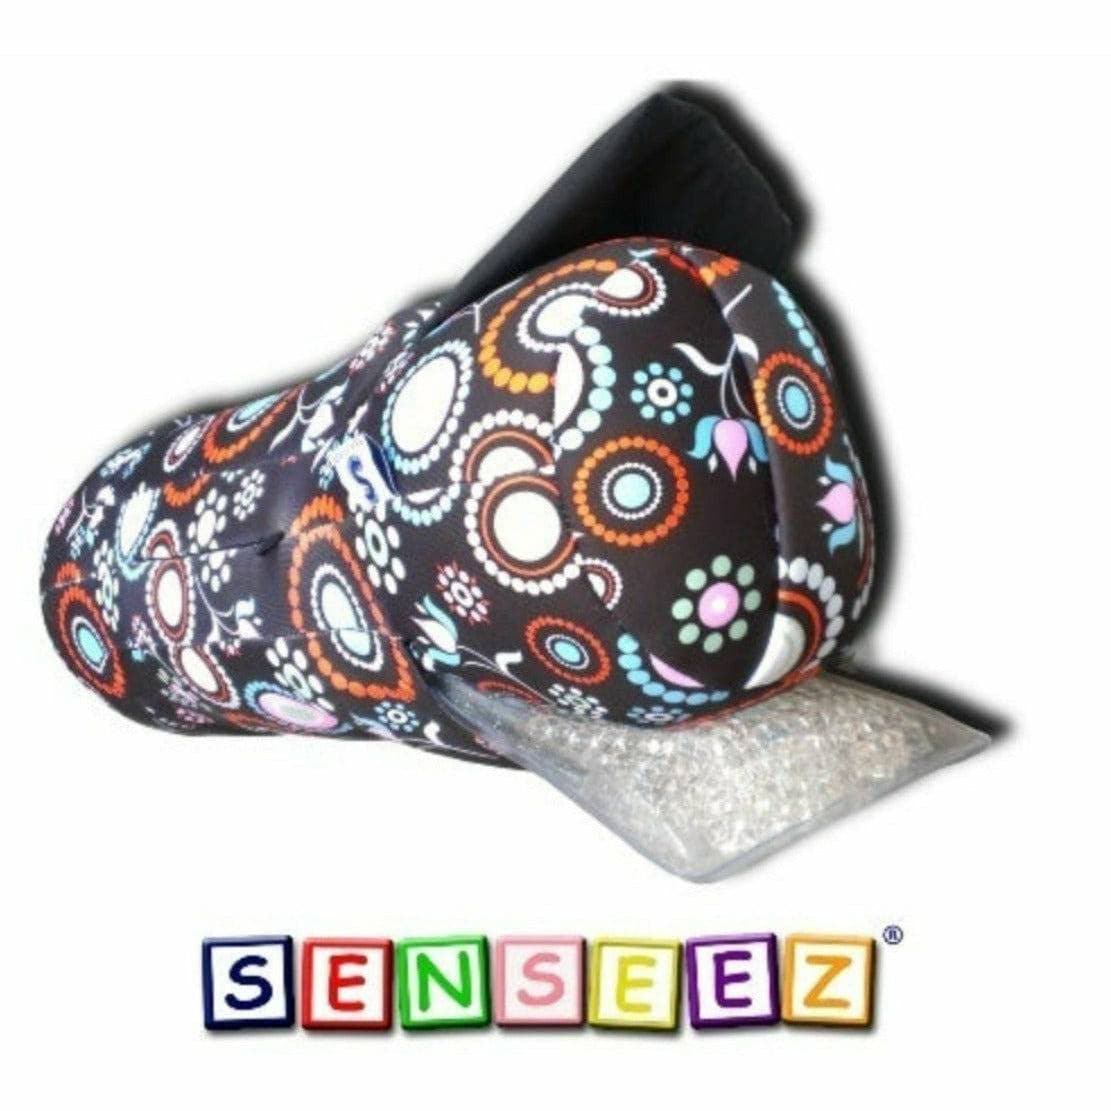 Senseez vibrating cushion - Adaptable Flower - Sensory Circle